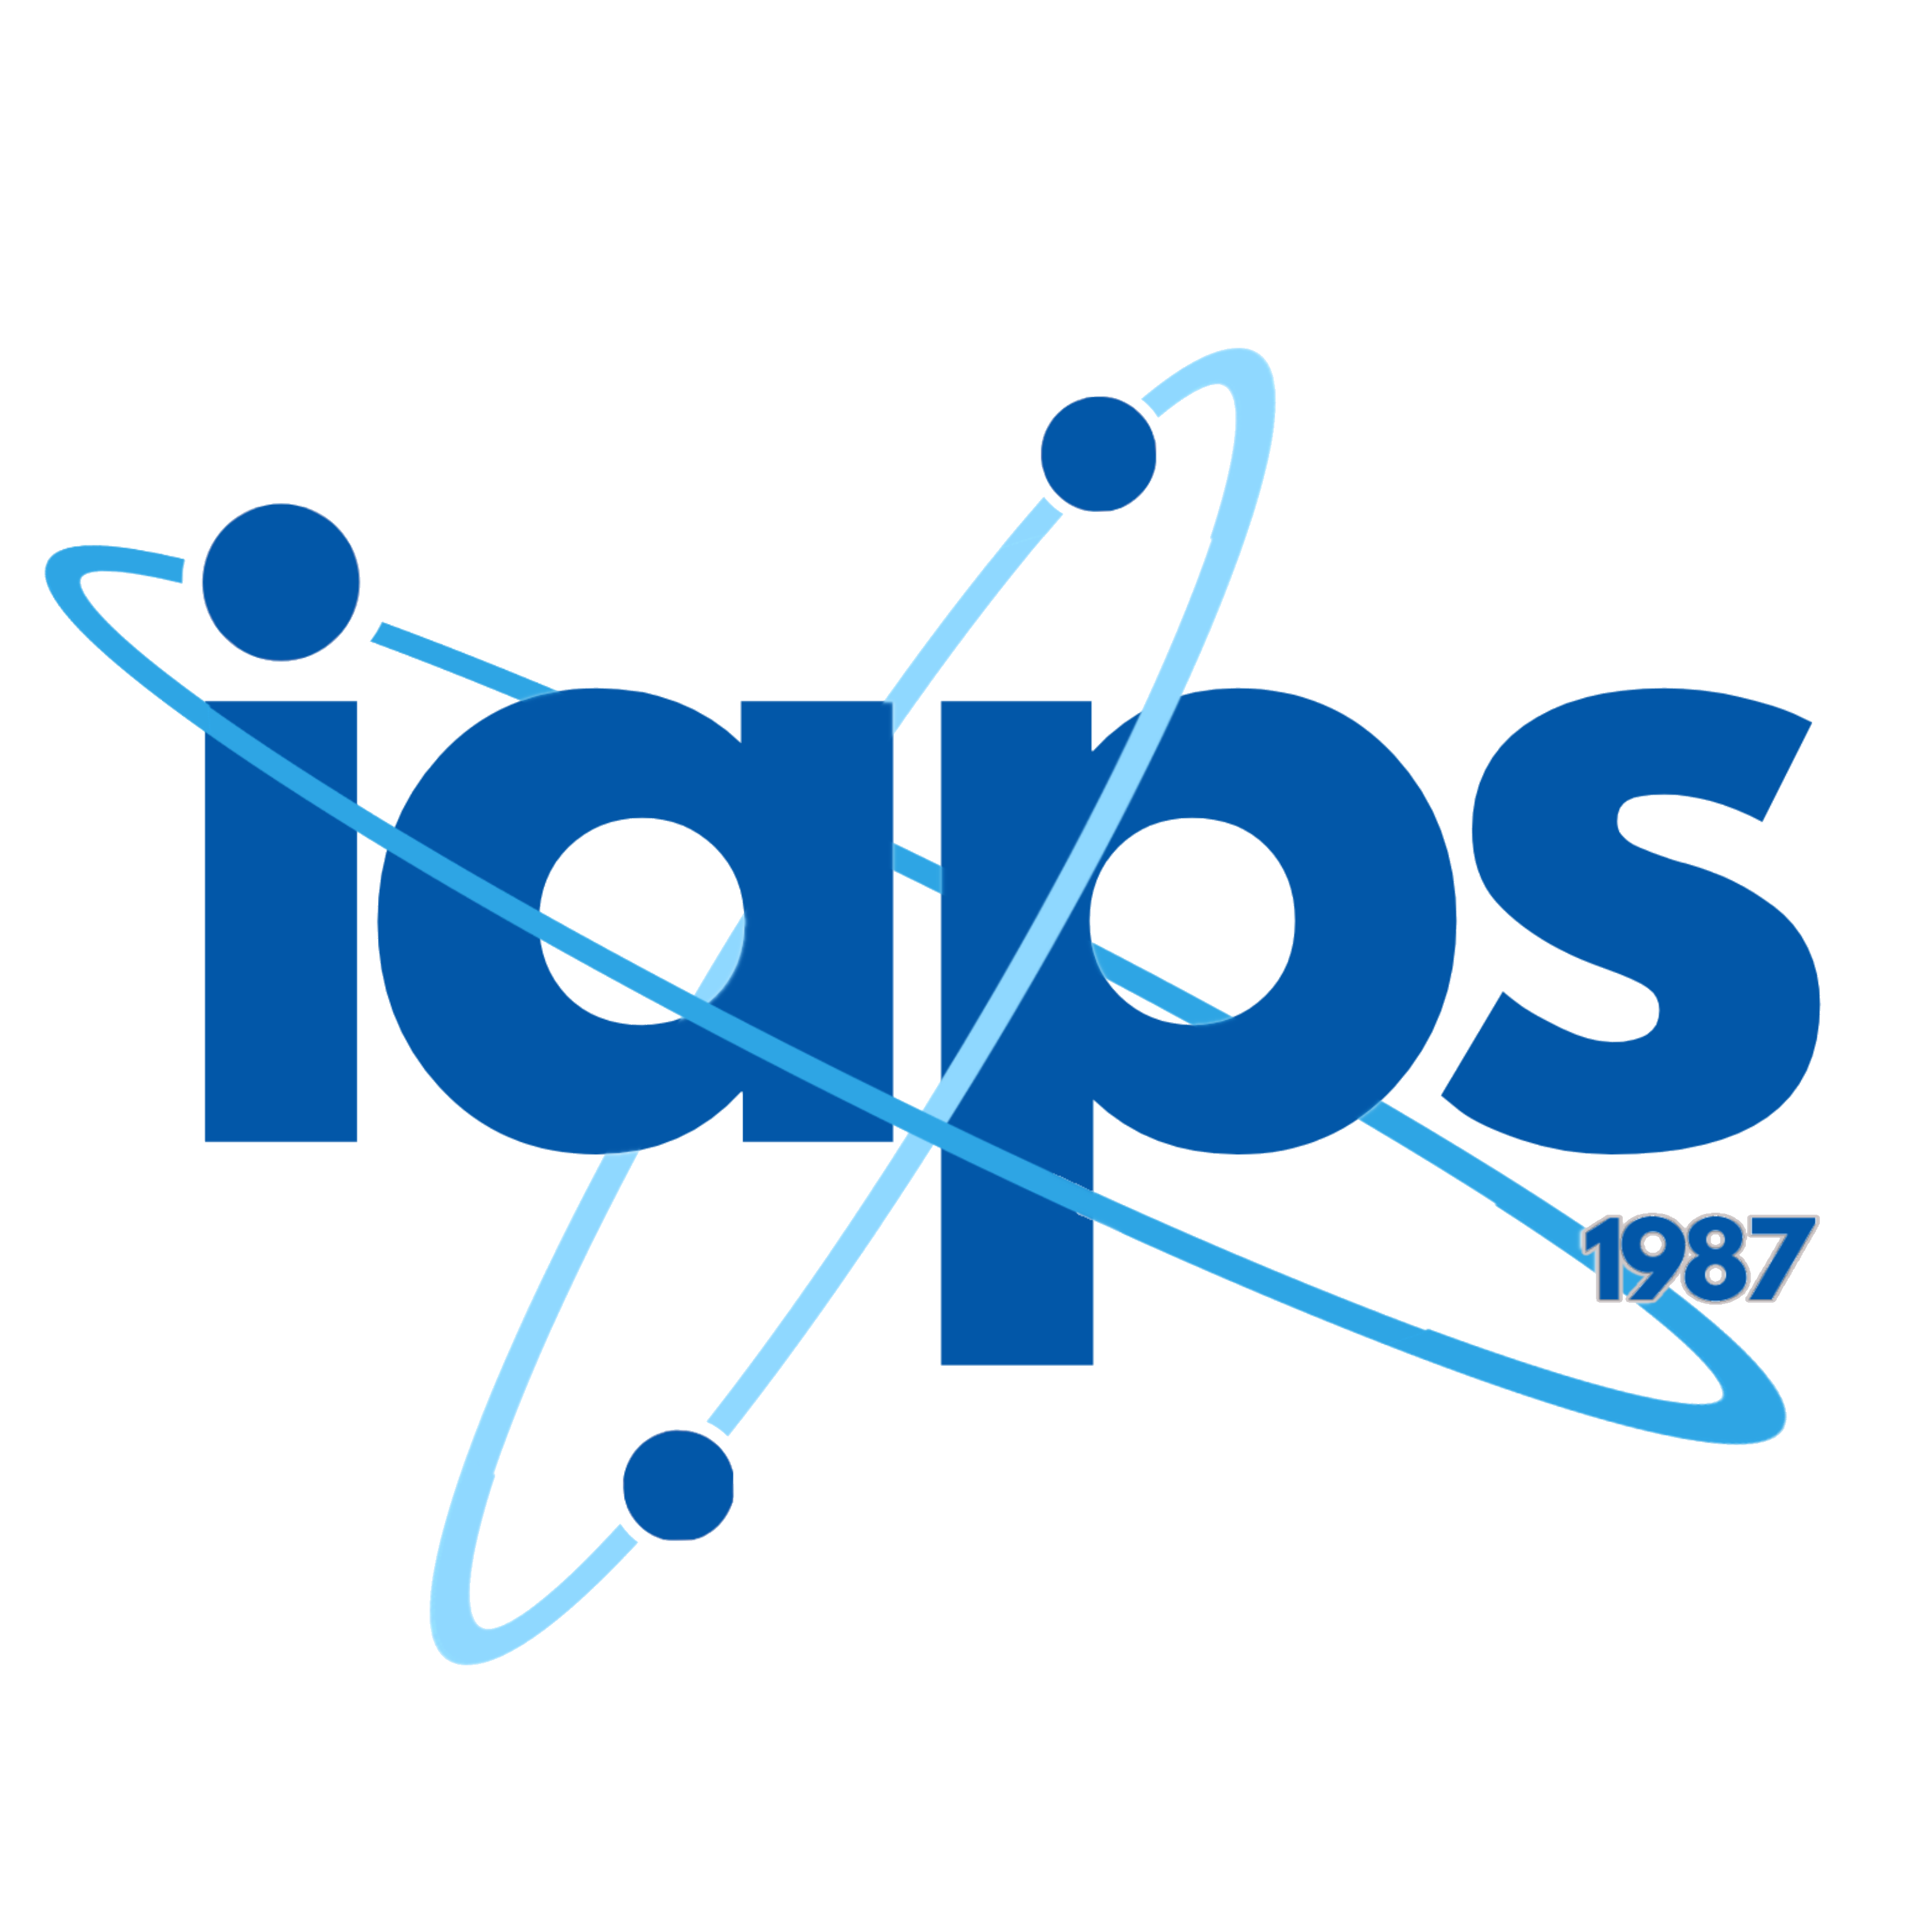 IAPS Logo  Transparent Image